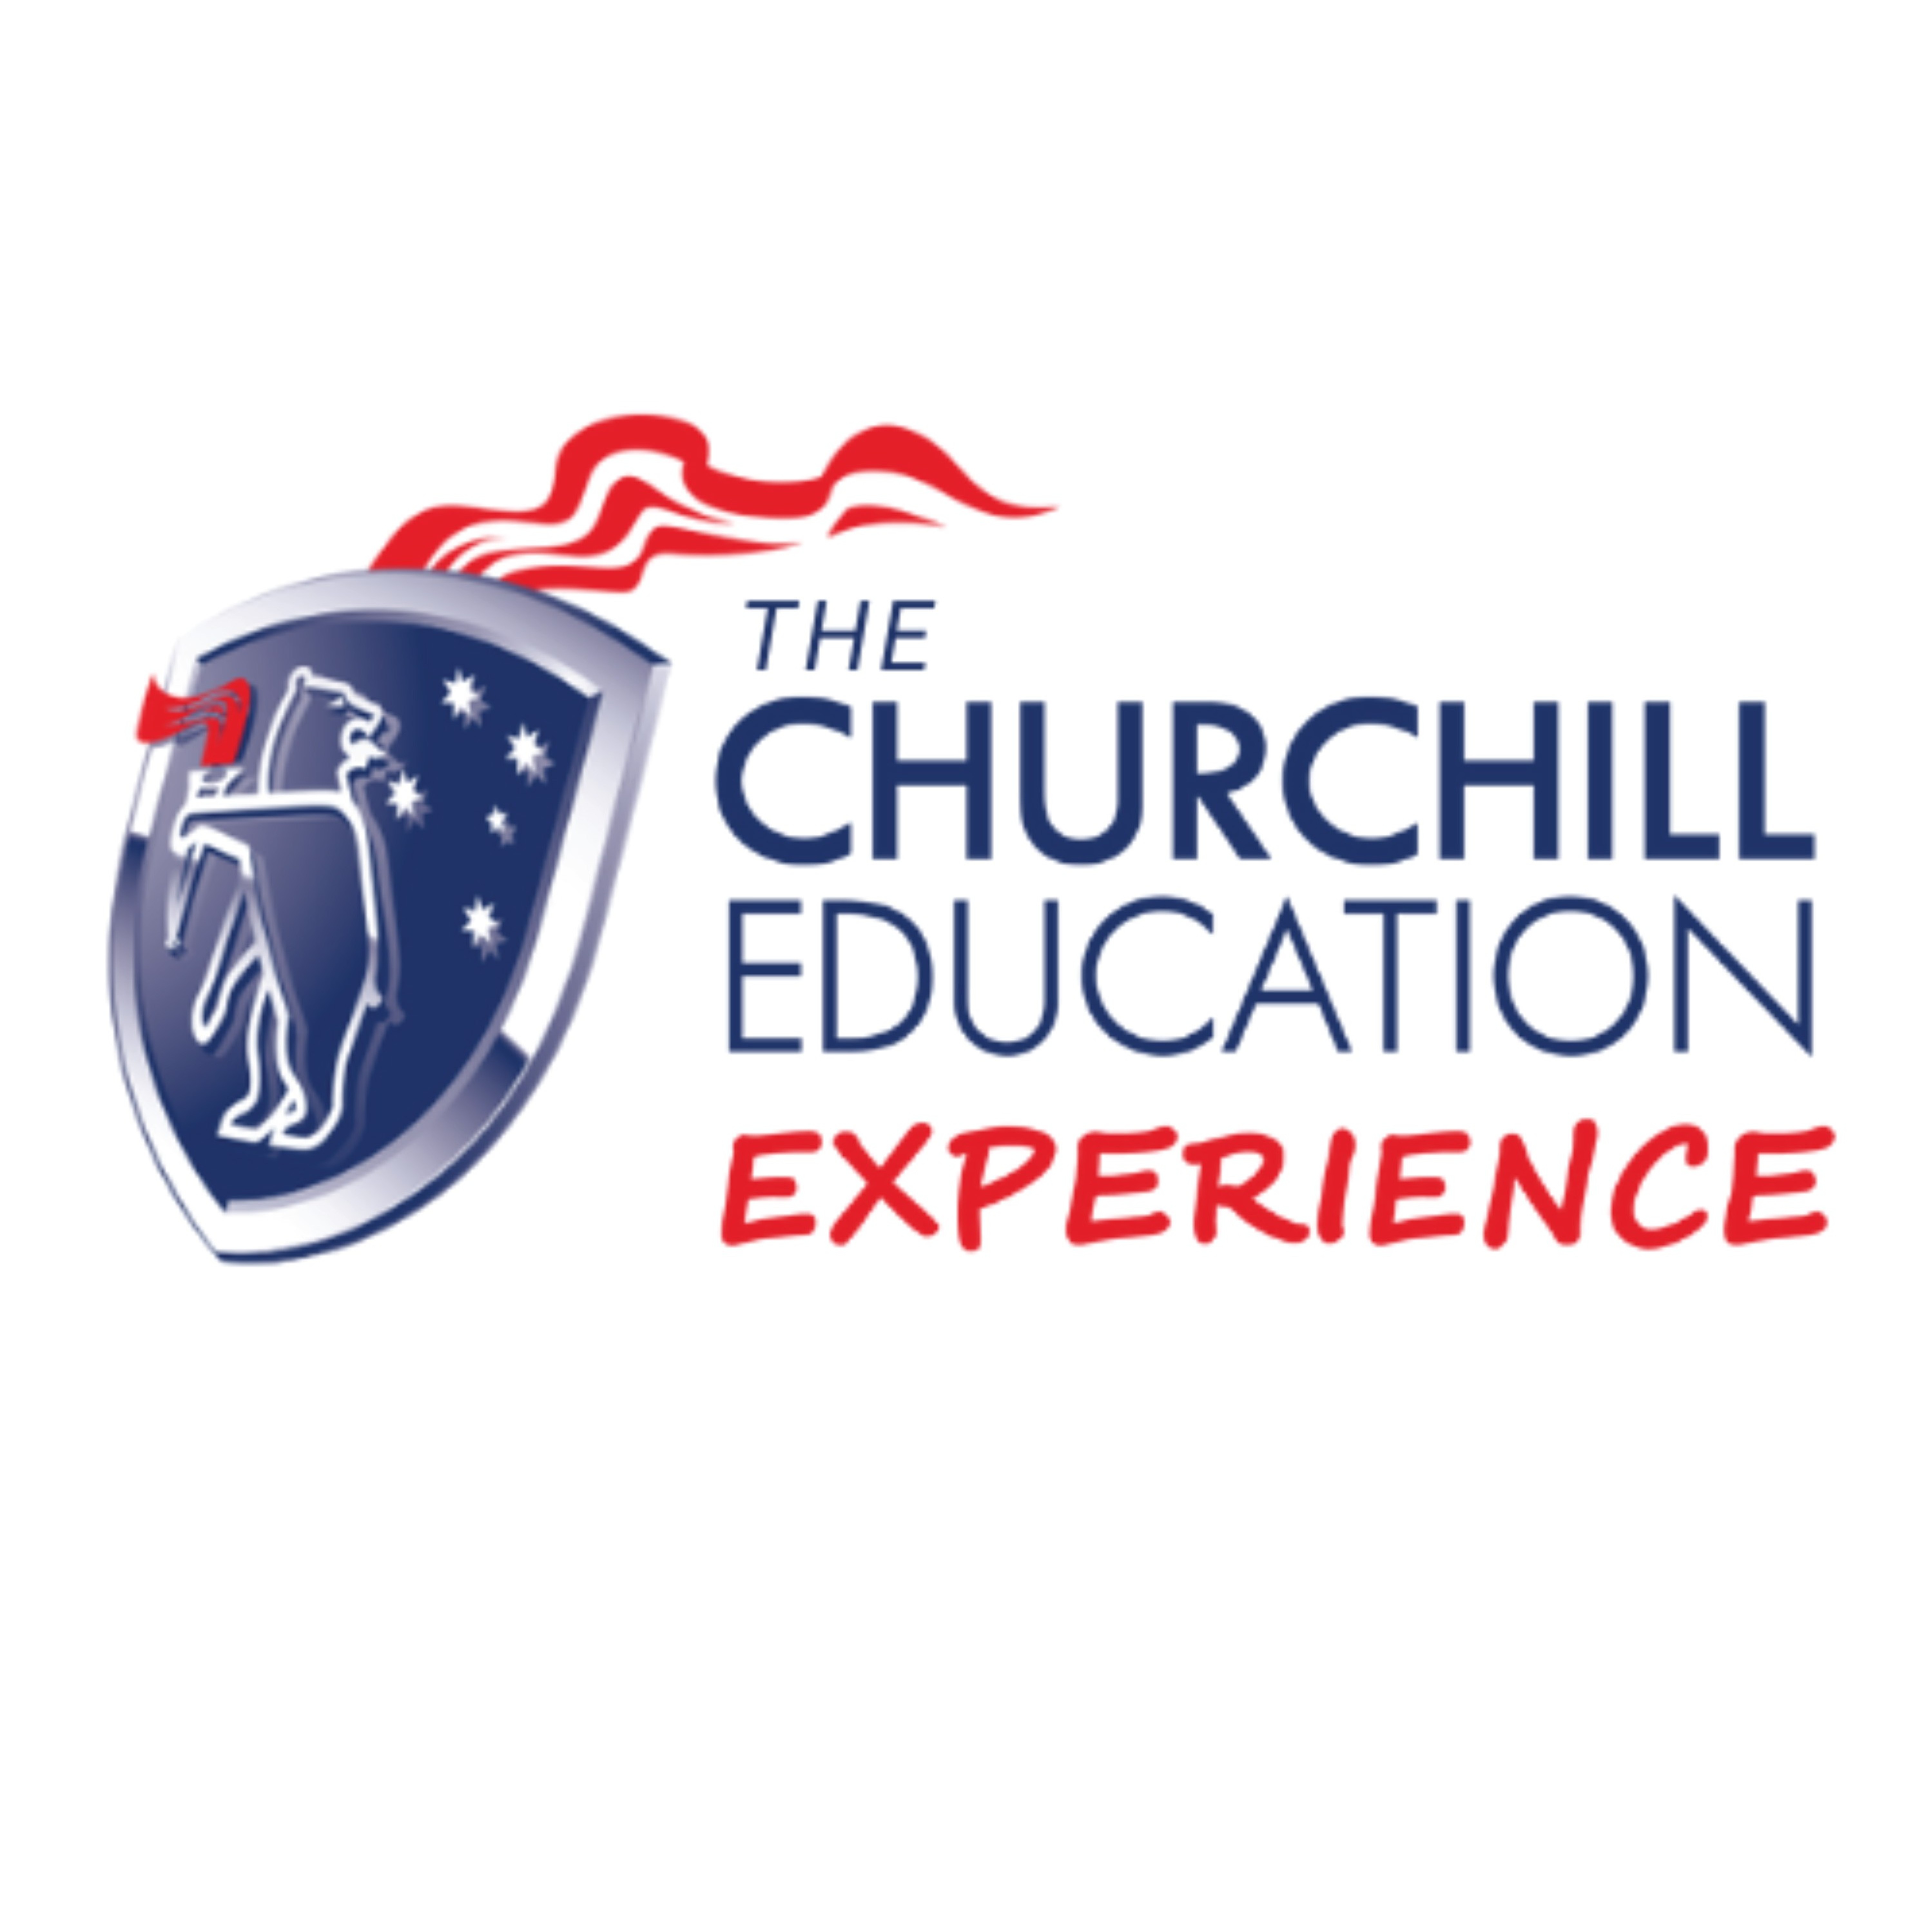 The Churchill Education Experience